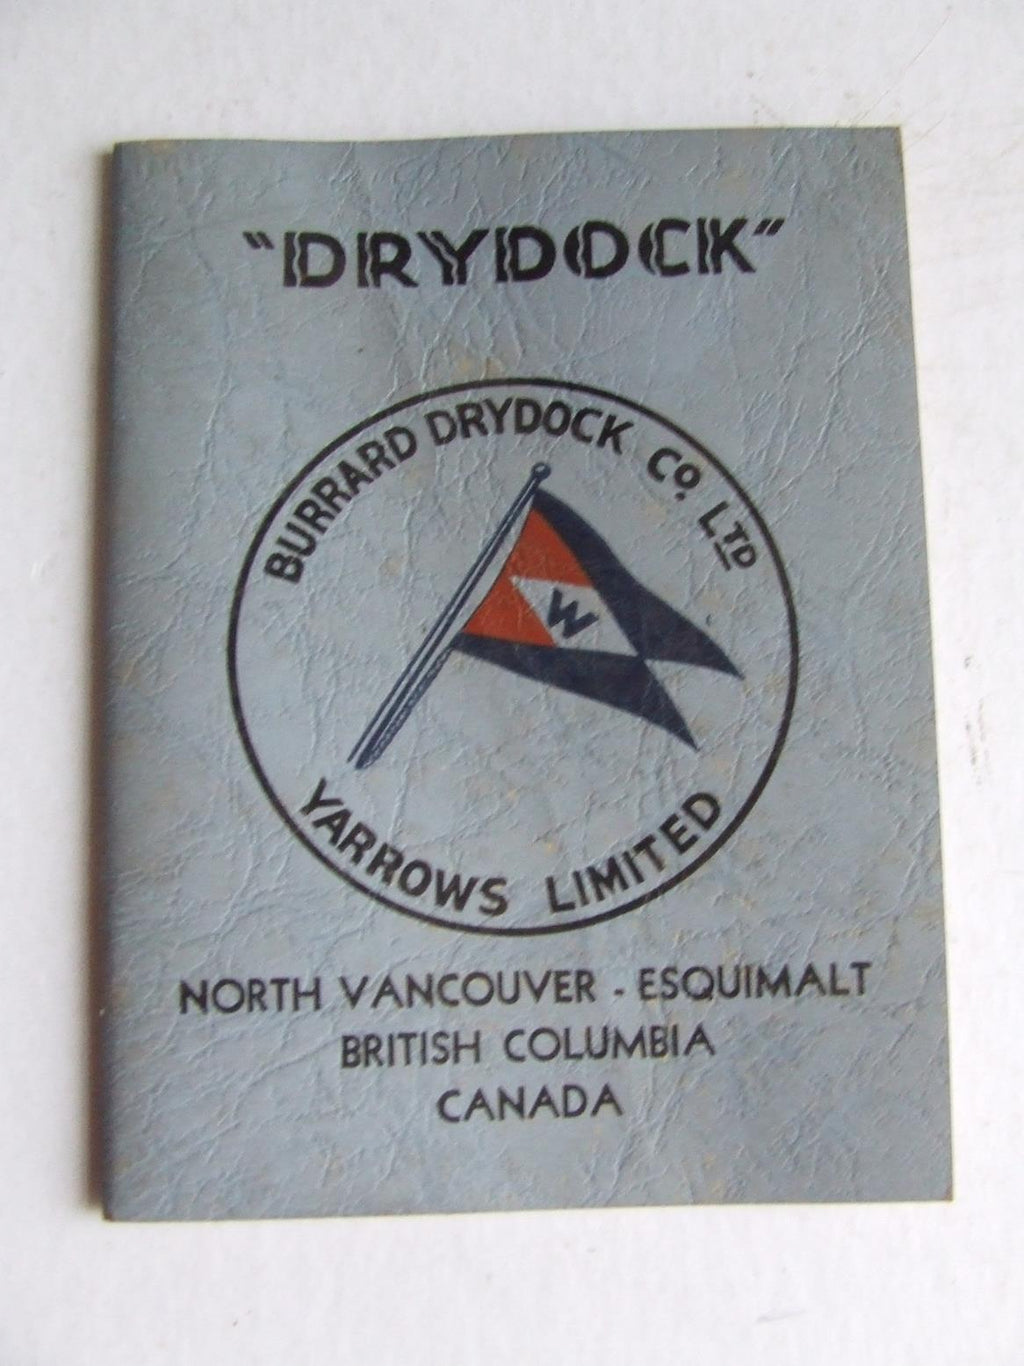 "Drydock". Burrard Drydock Co.Ltd. / Yarrows Ltd.